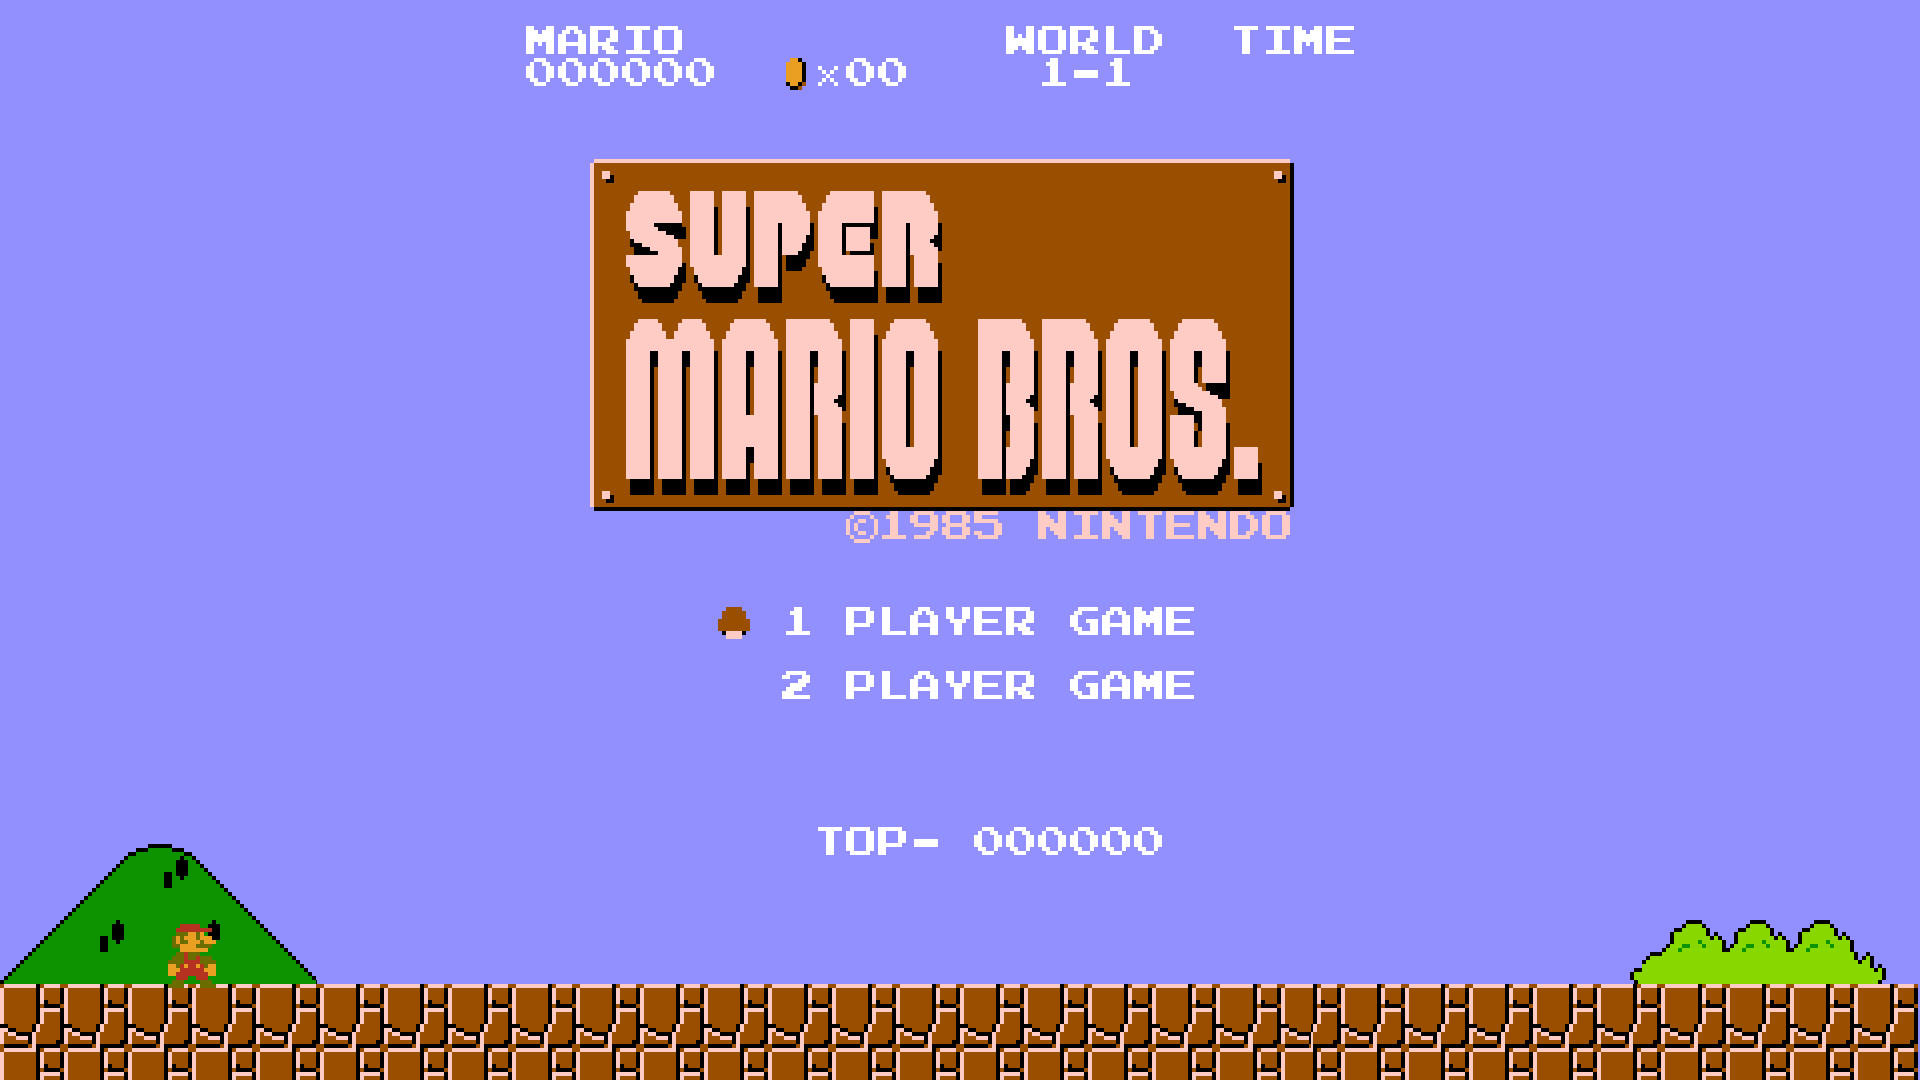 Super mario bros 1. Братья Марио игра 1983. Супер Марио игра Денди. Меню Марио игра. Главное меню Марио.